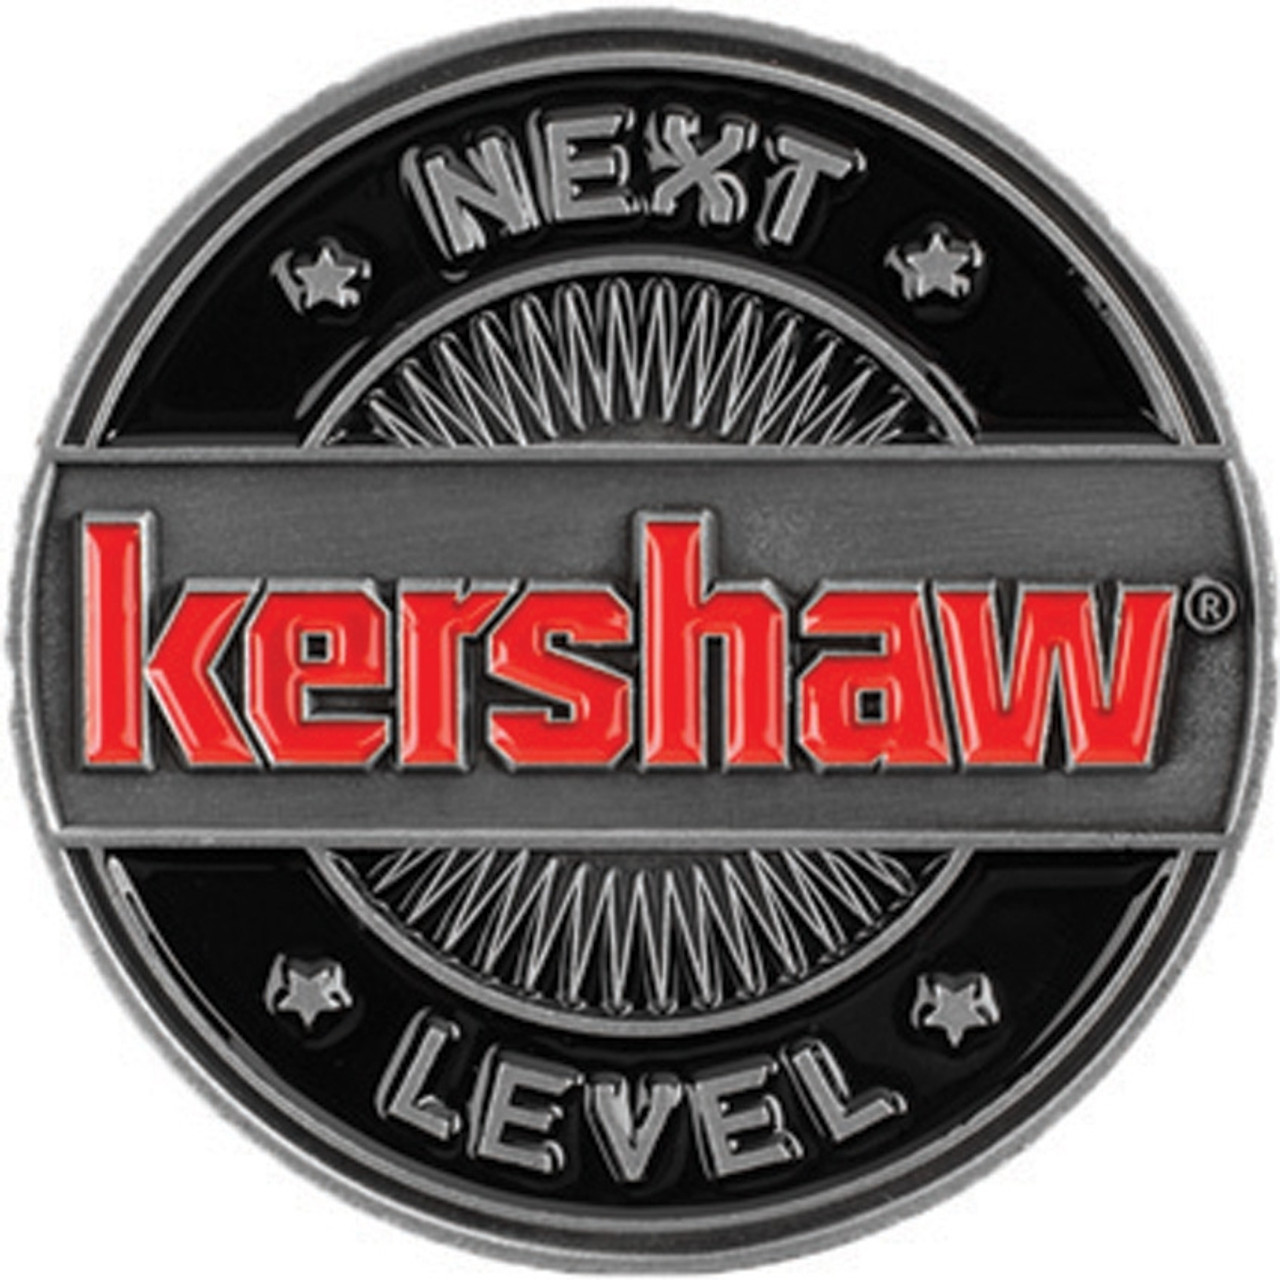 Kershaw Challenge CoinNext Level